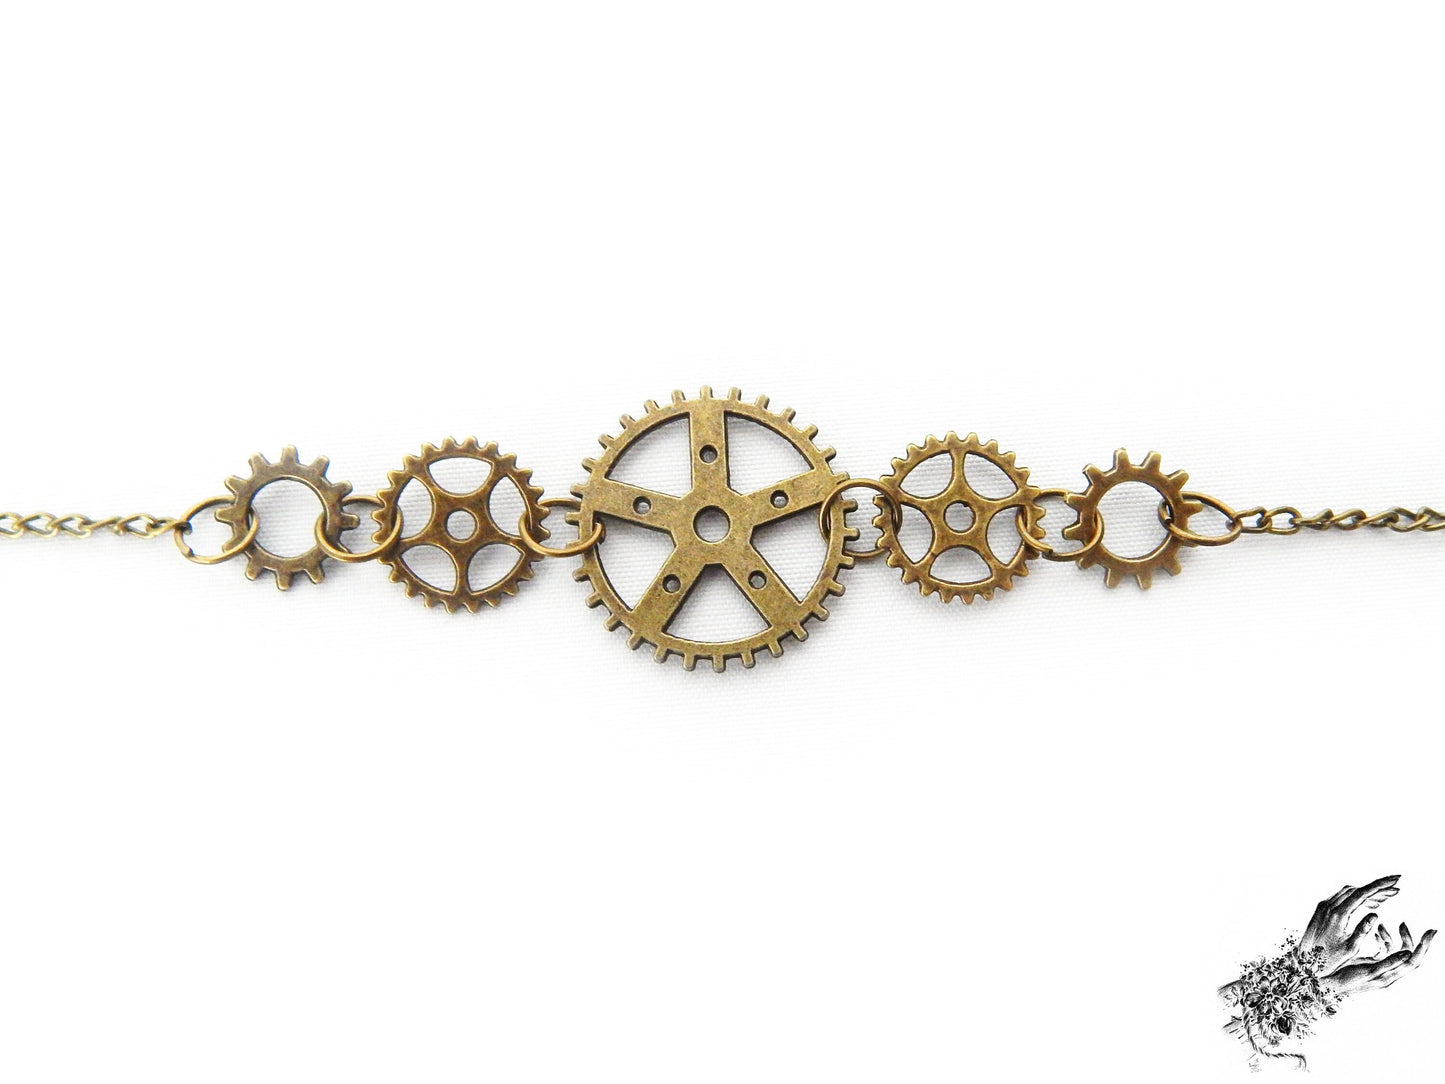 Antique Bronze Gear Bracelet